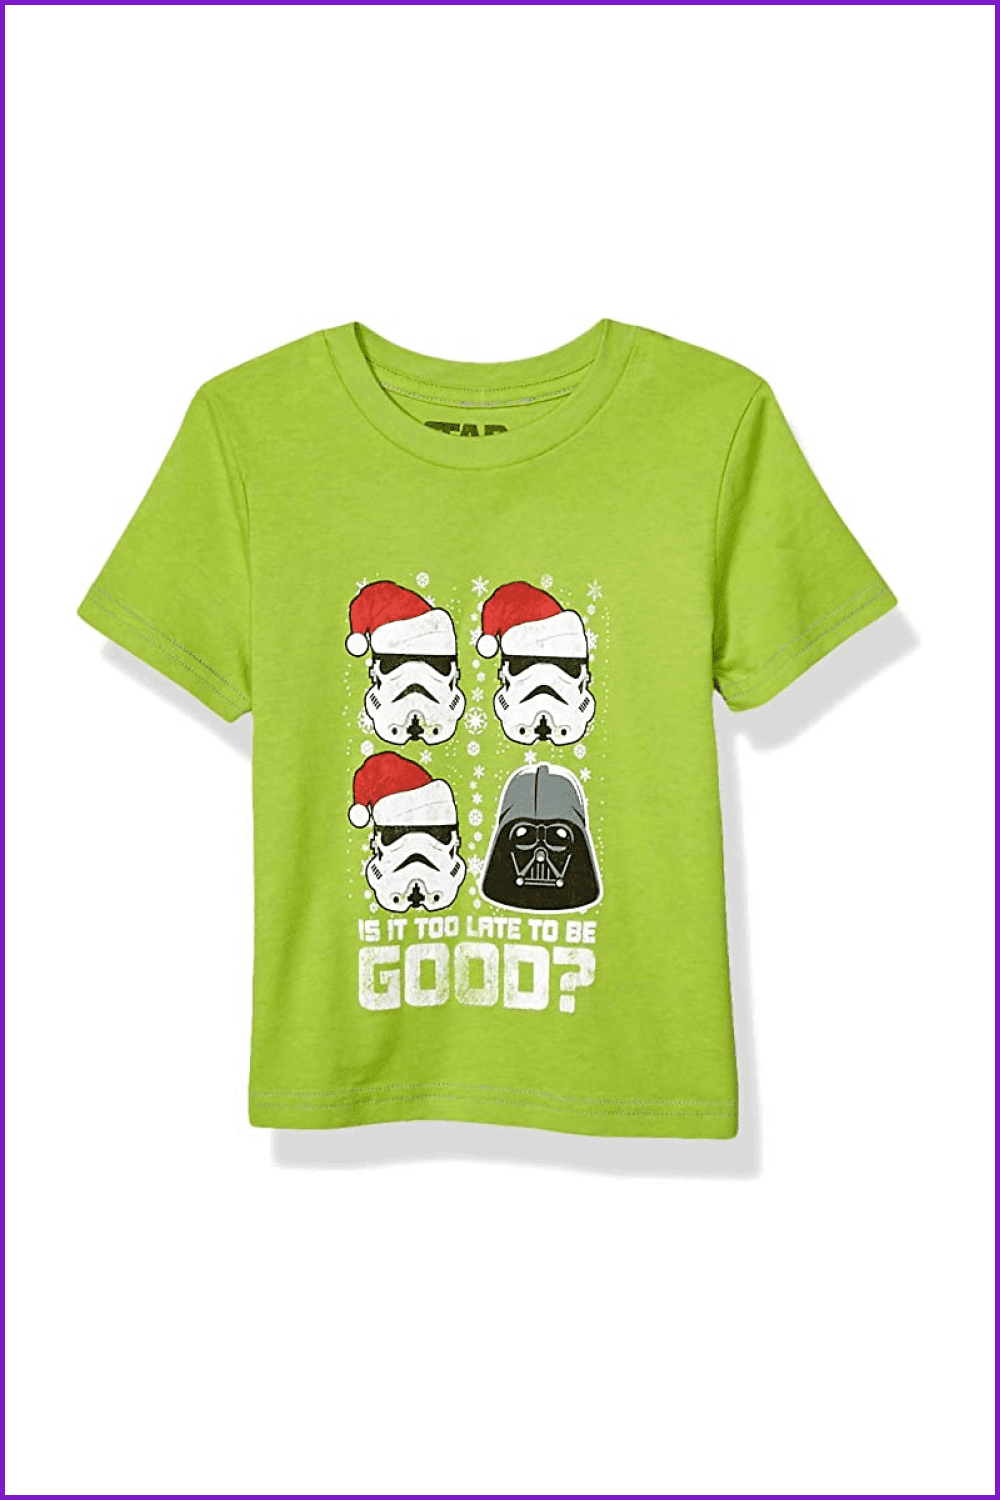 Green t-shirt with Star Wars hero in Santa hat and Darth Vader.